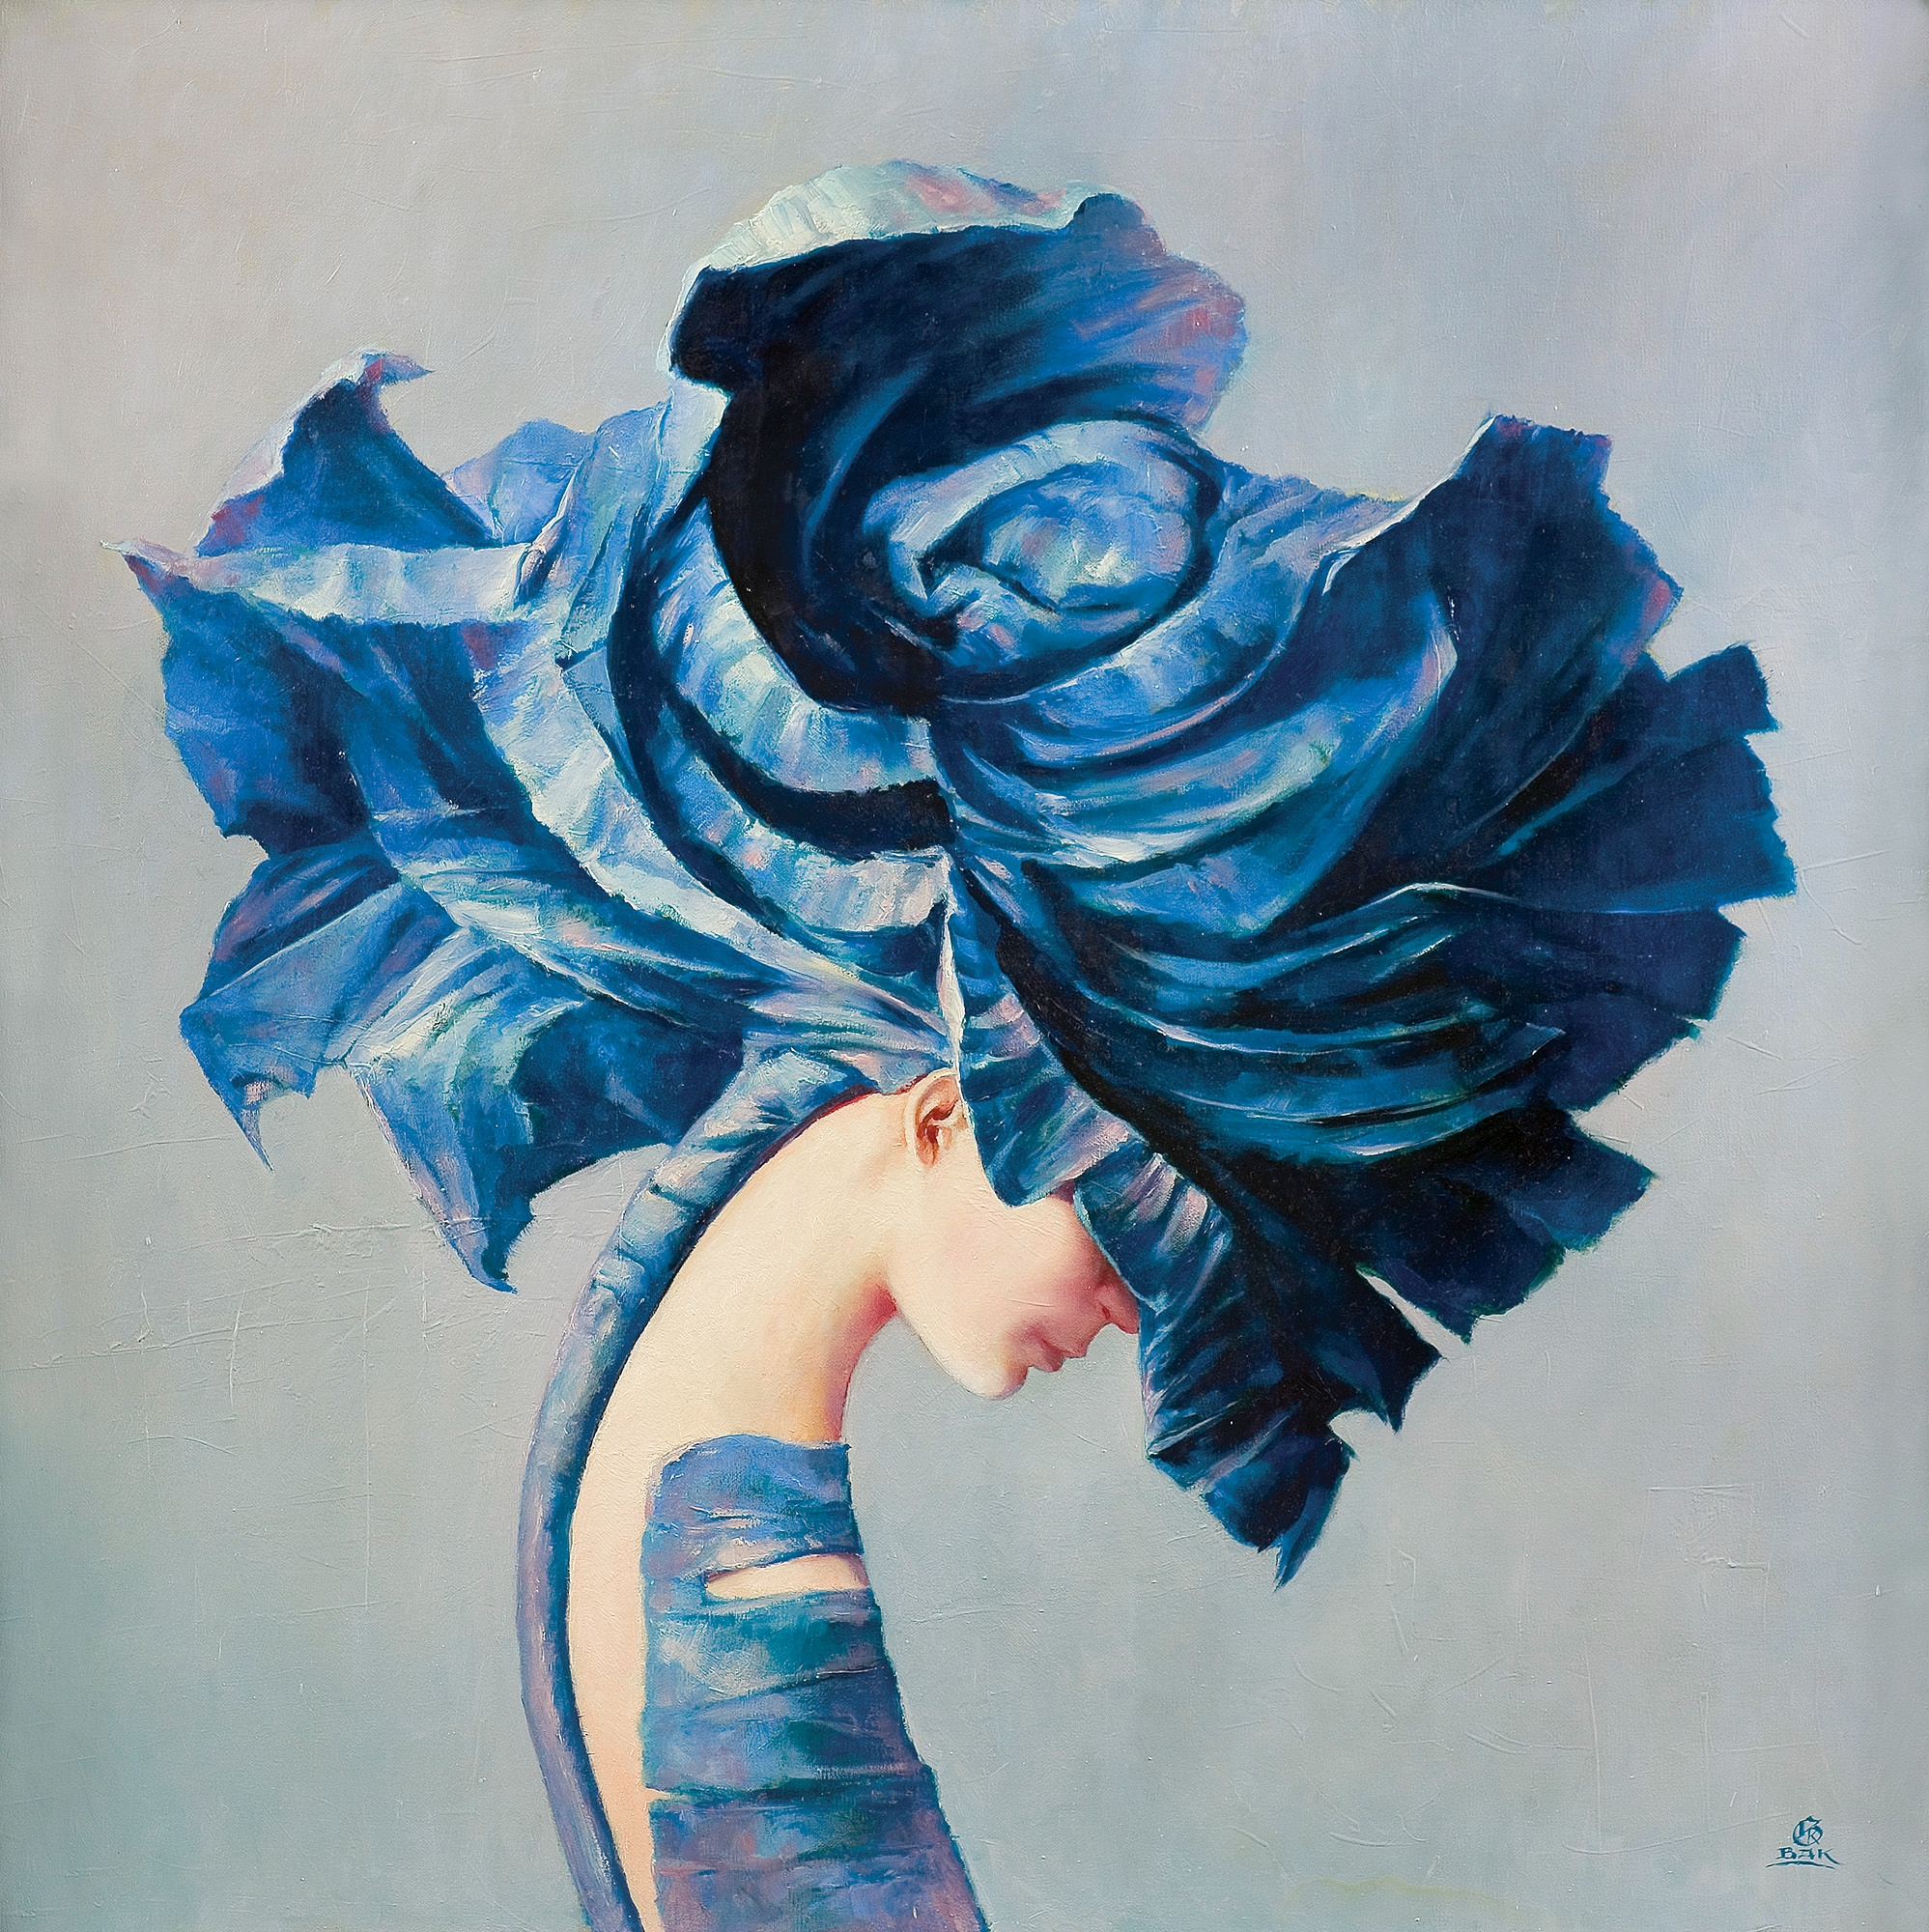 BLUE FLOWER by Karol Bak, 2004